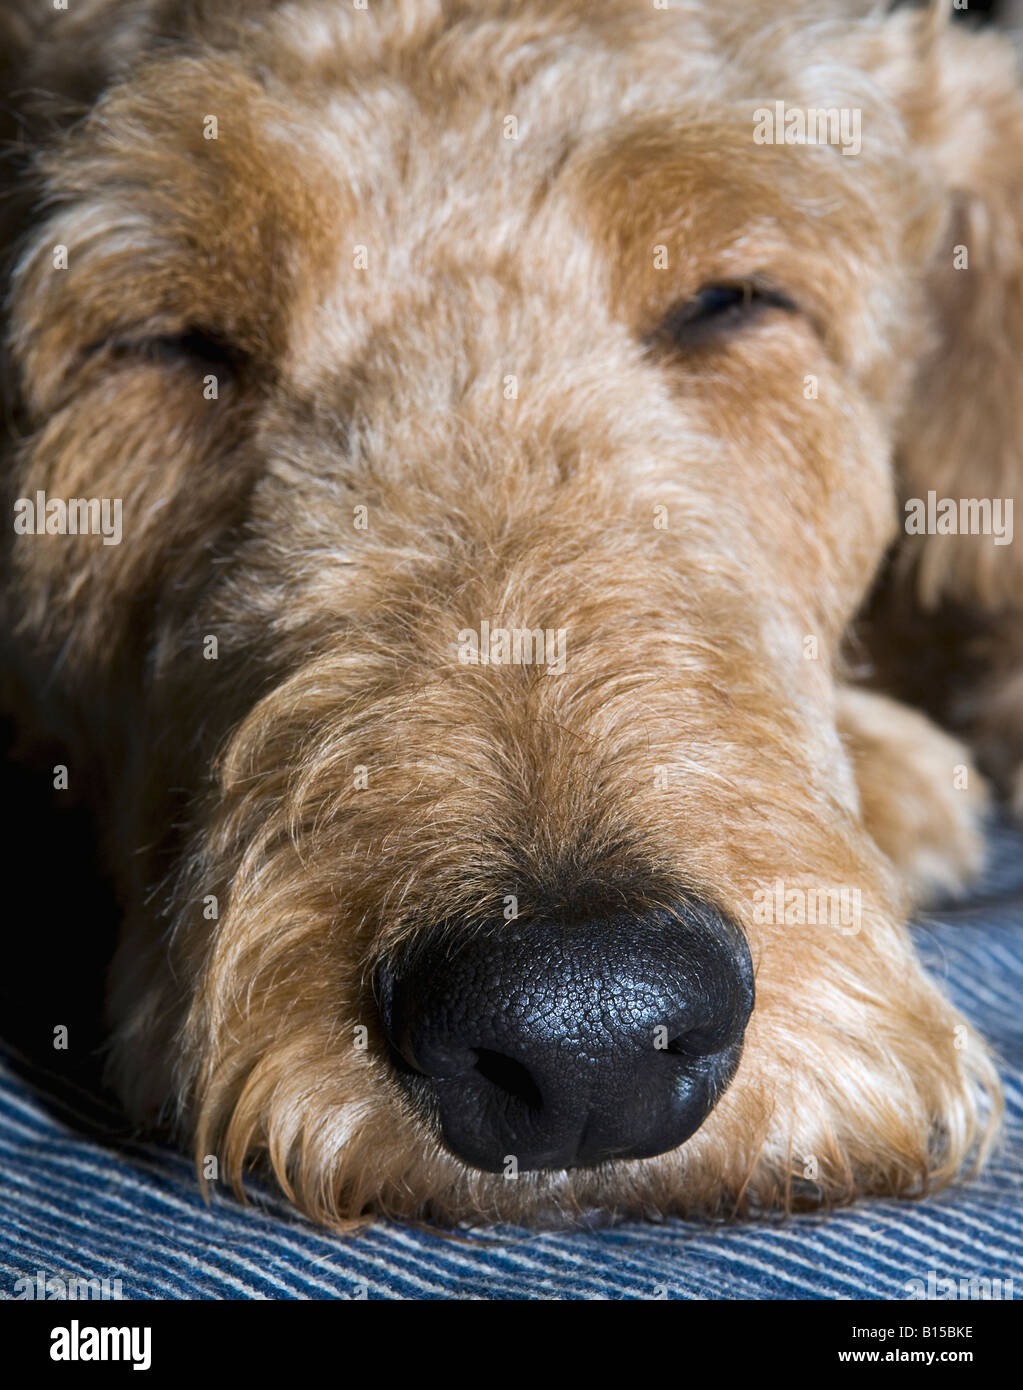 close up of sleeping dog with big nose Stock Photo